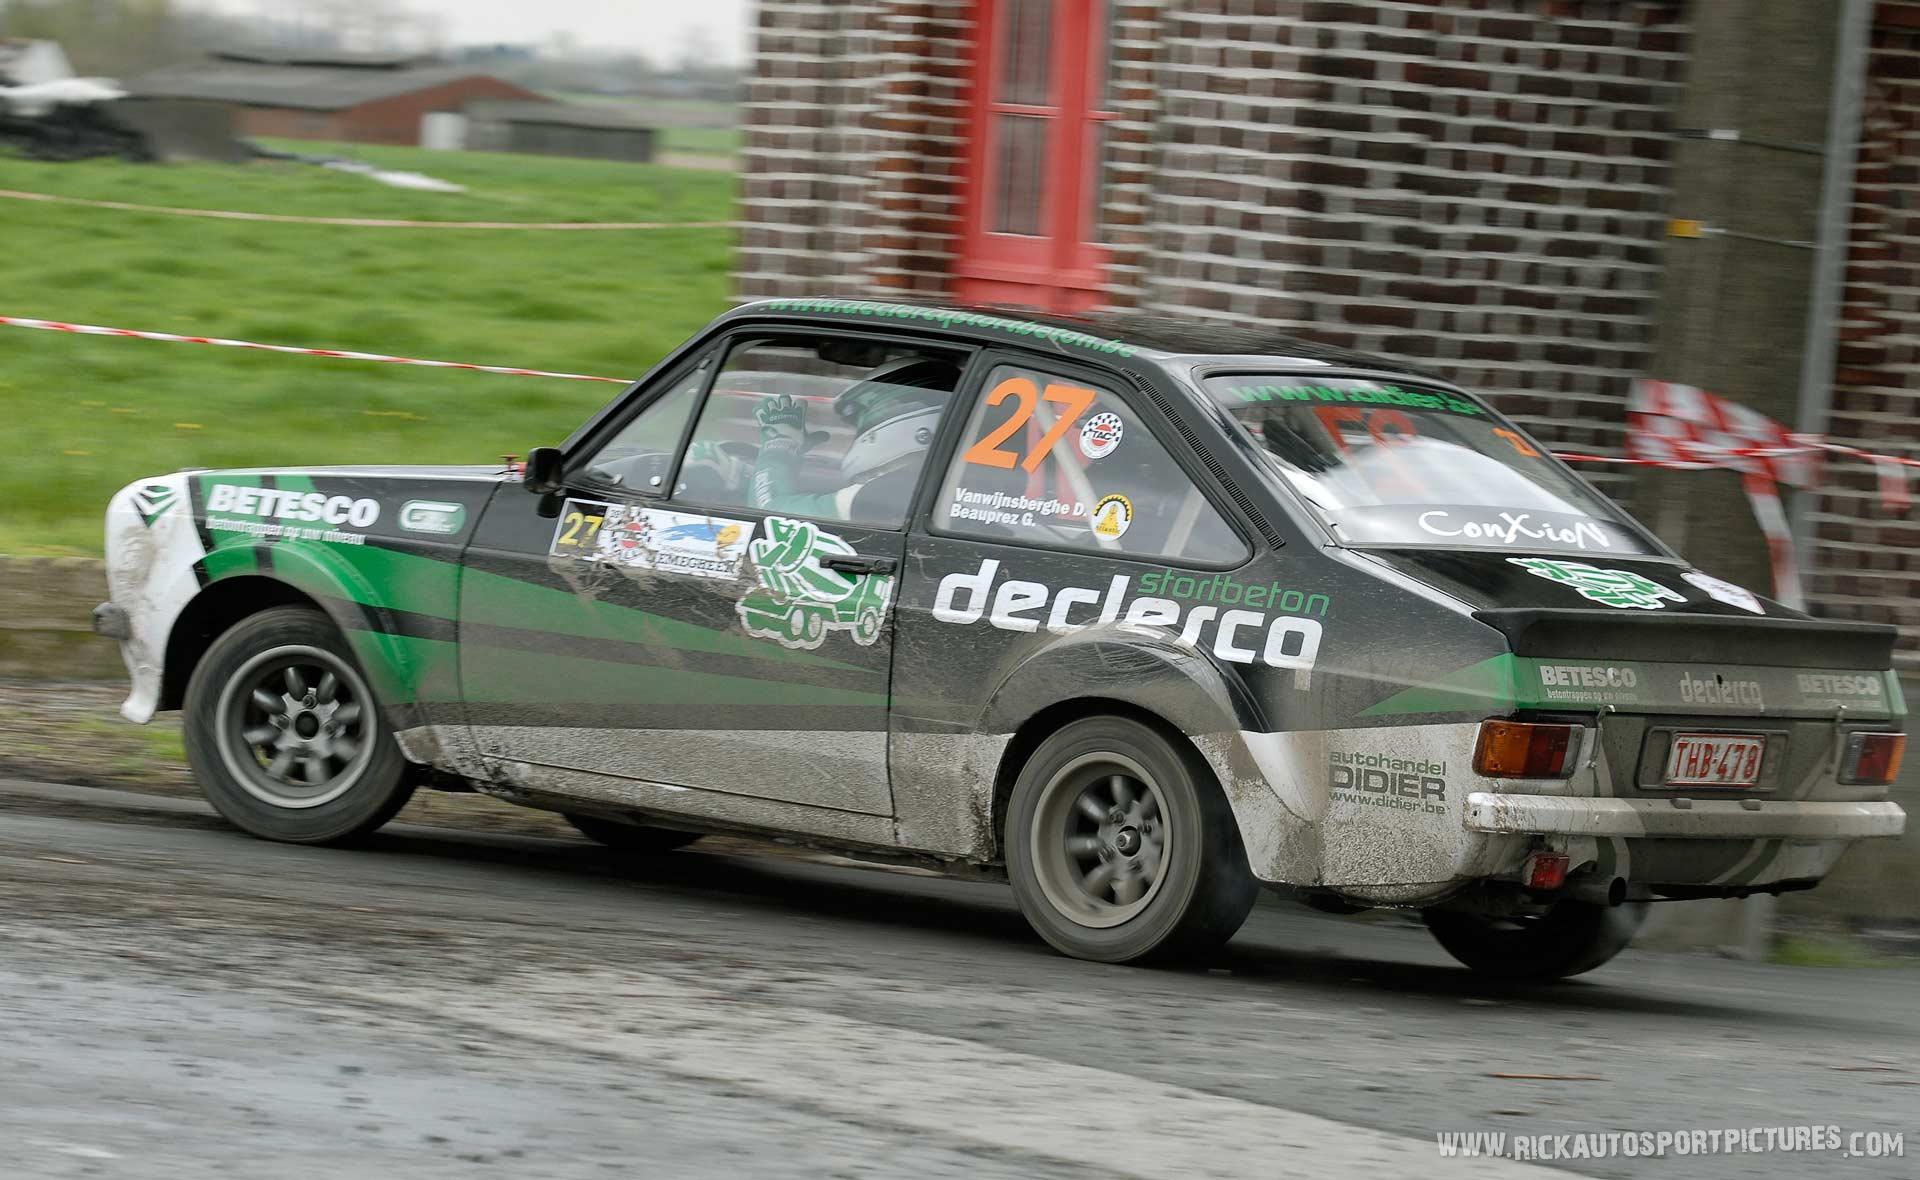 Didier Vanwijnsberghe tac rally 2012